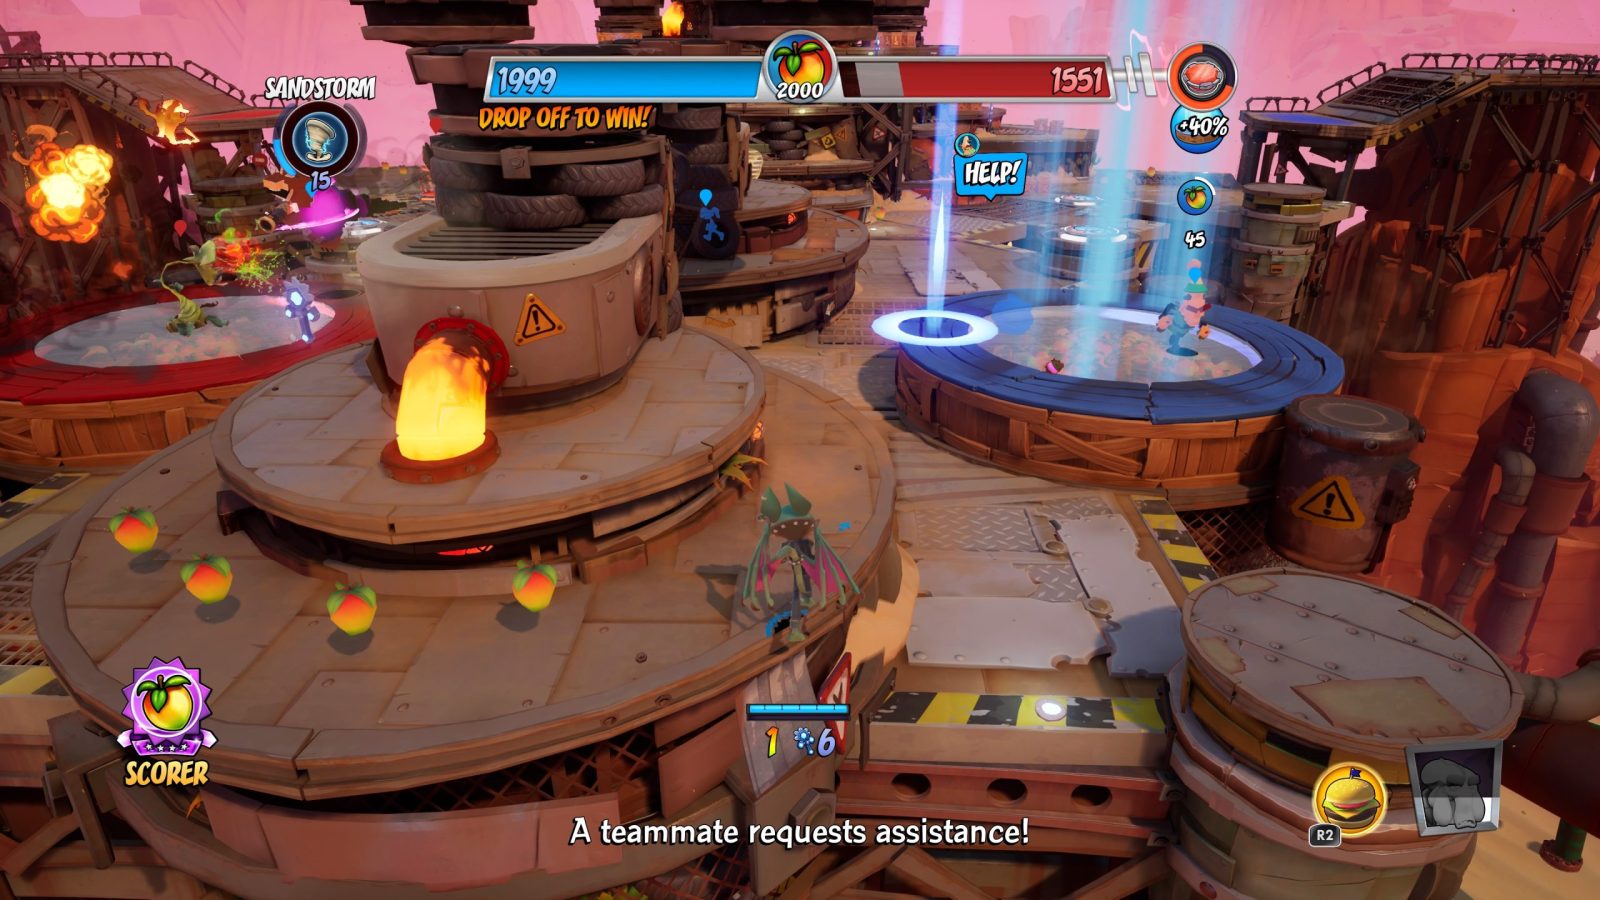 Crash Team Rumble brings Wumpa-fueled multiplayer mayhem in June